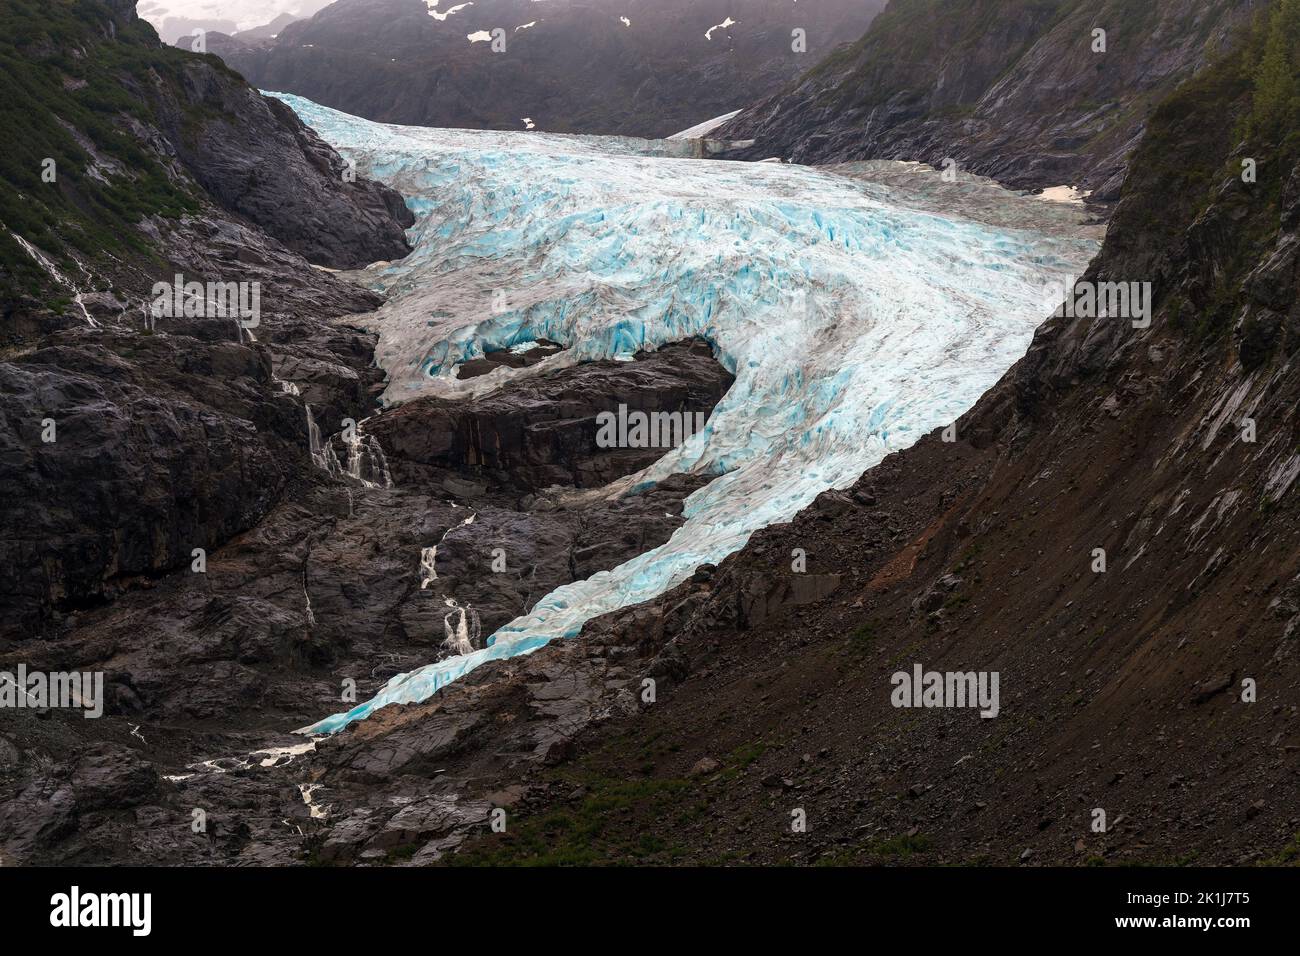 Receding bear glacier due to climate change, Stewart, British Columbia, Canada. Stock Photo